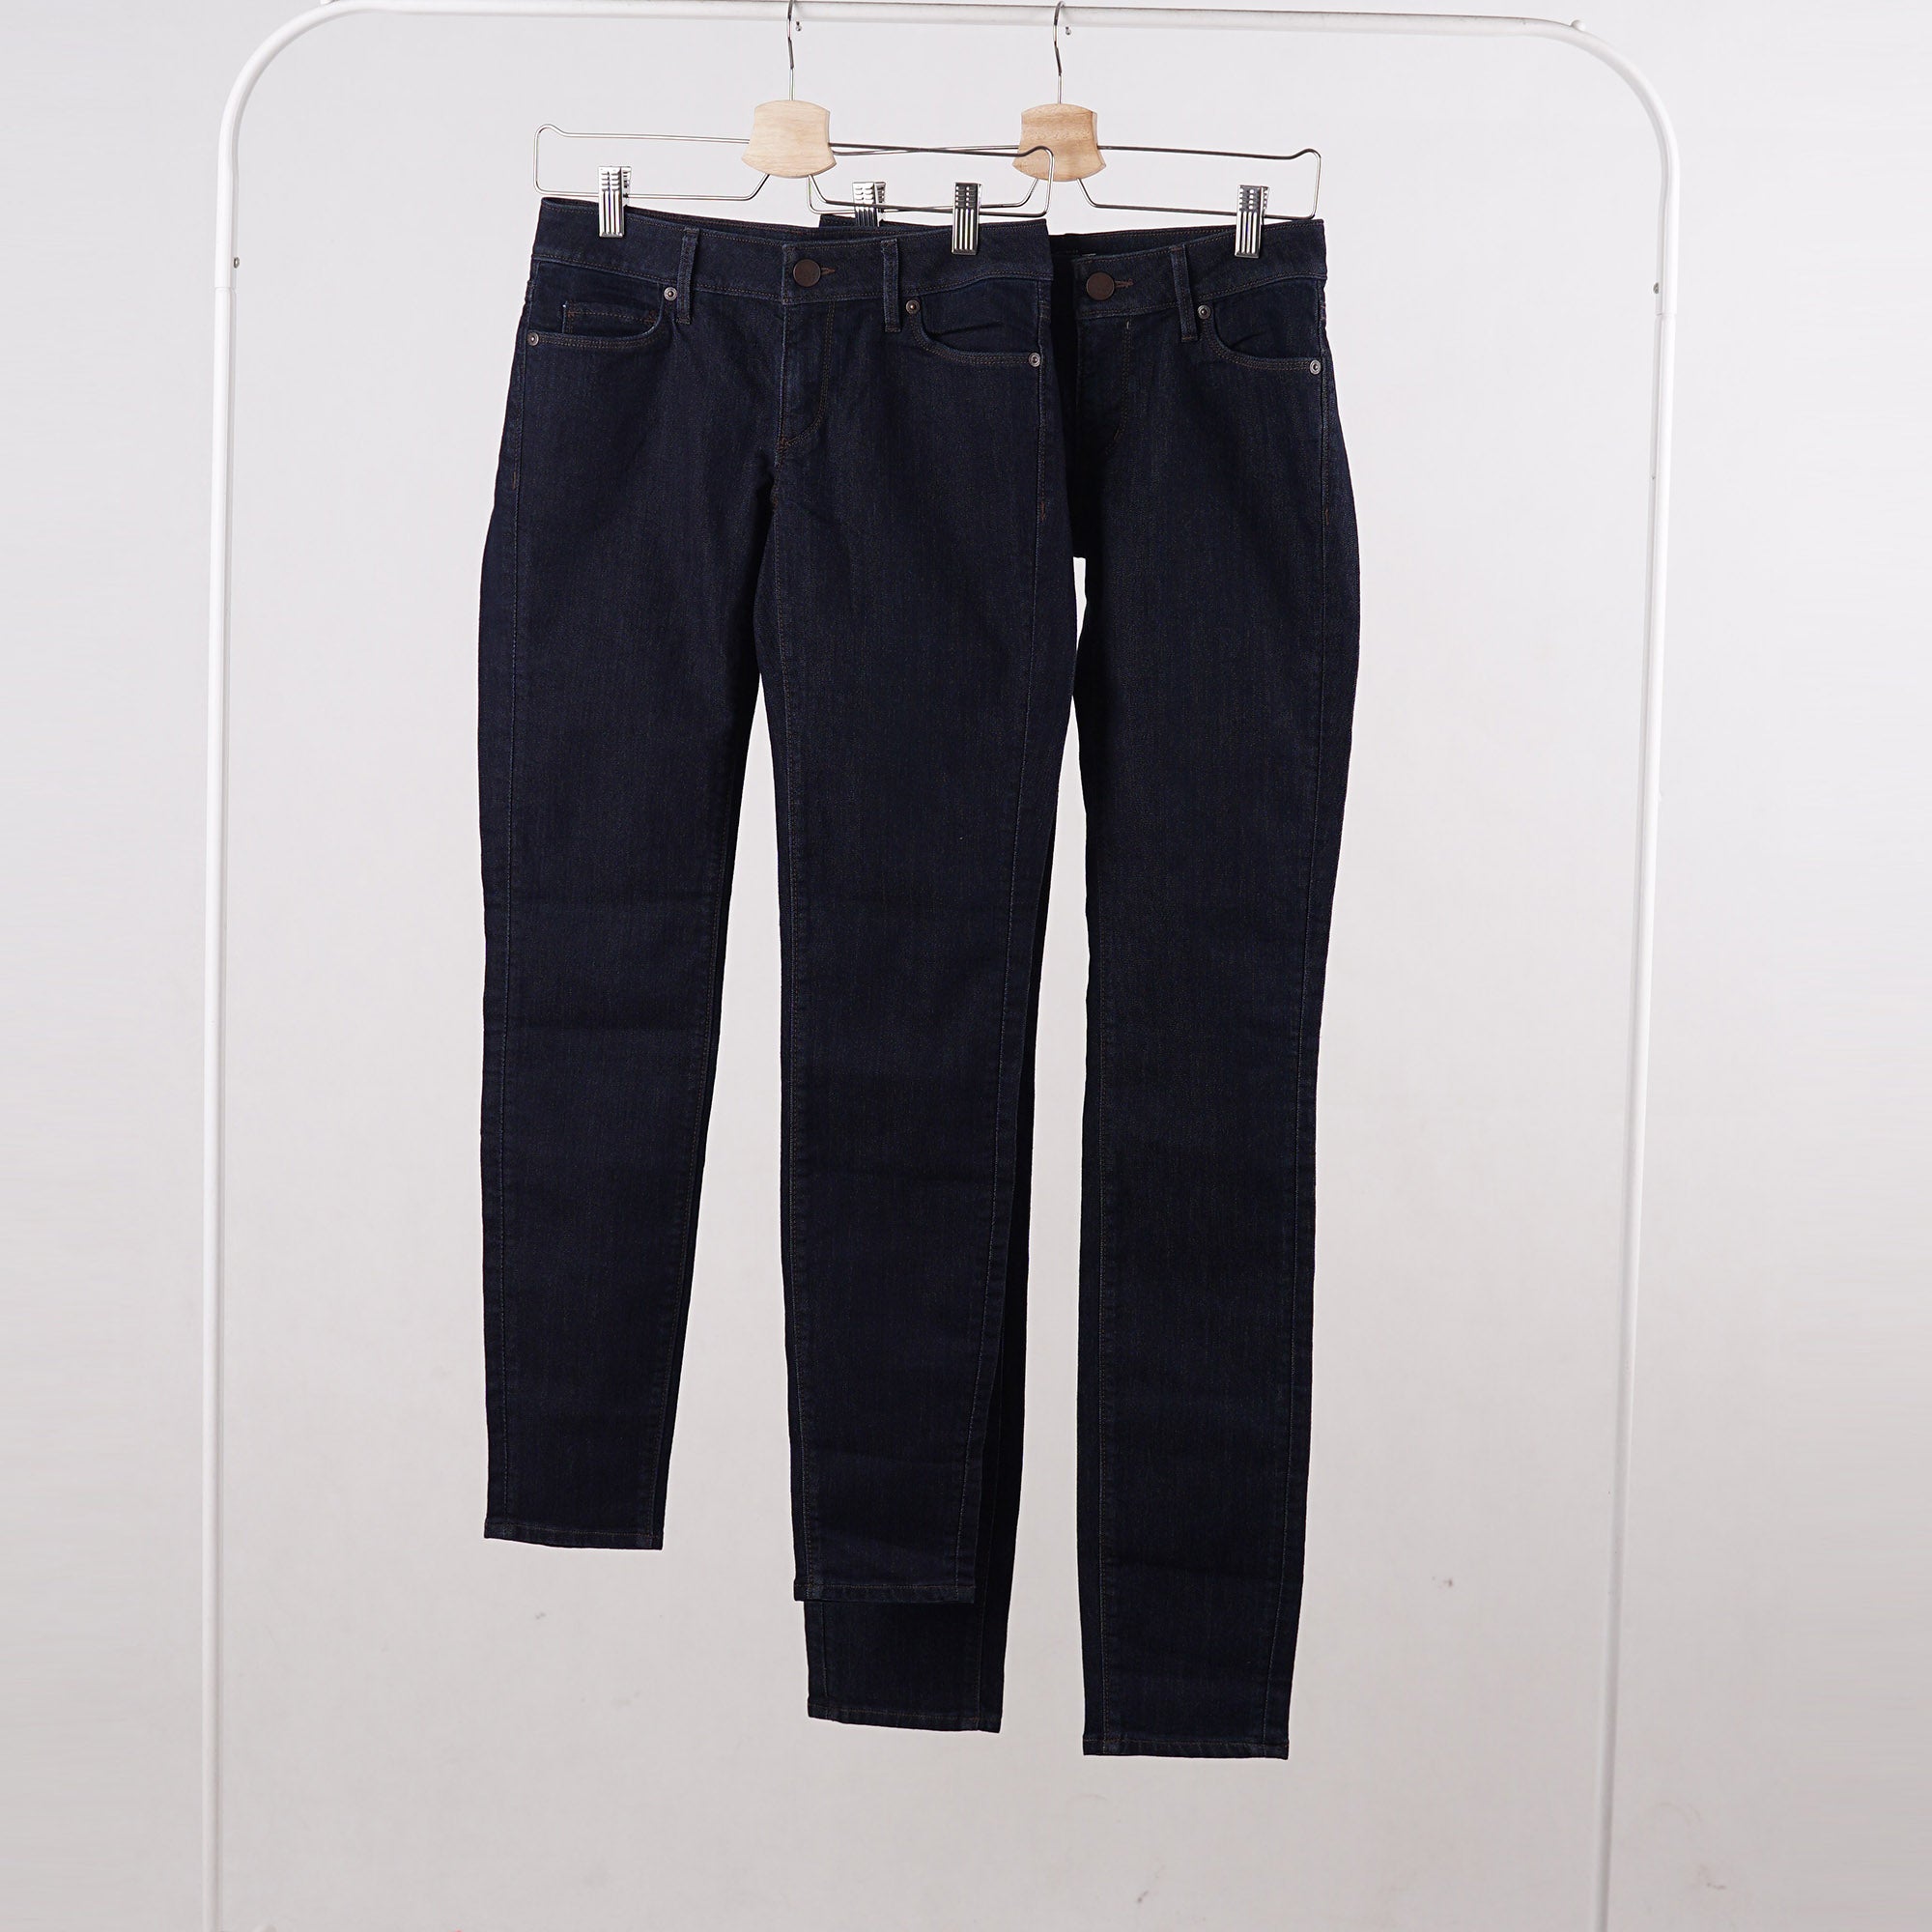 Celana Jeans Wanita Curvy Super Skinny Jeans Pants (LDW 26-48)